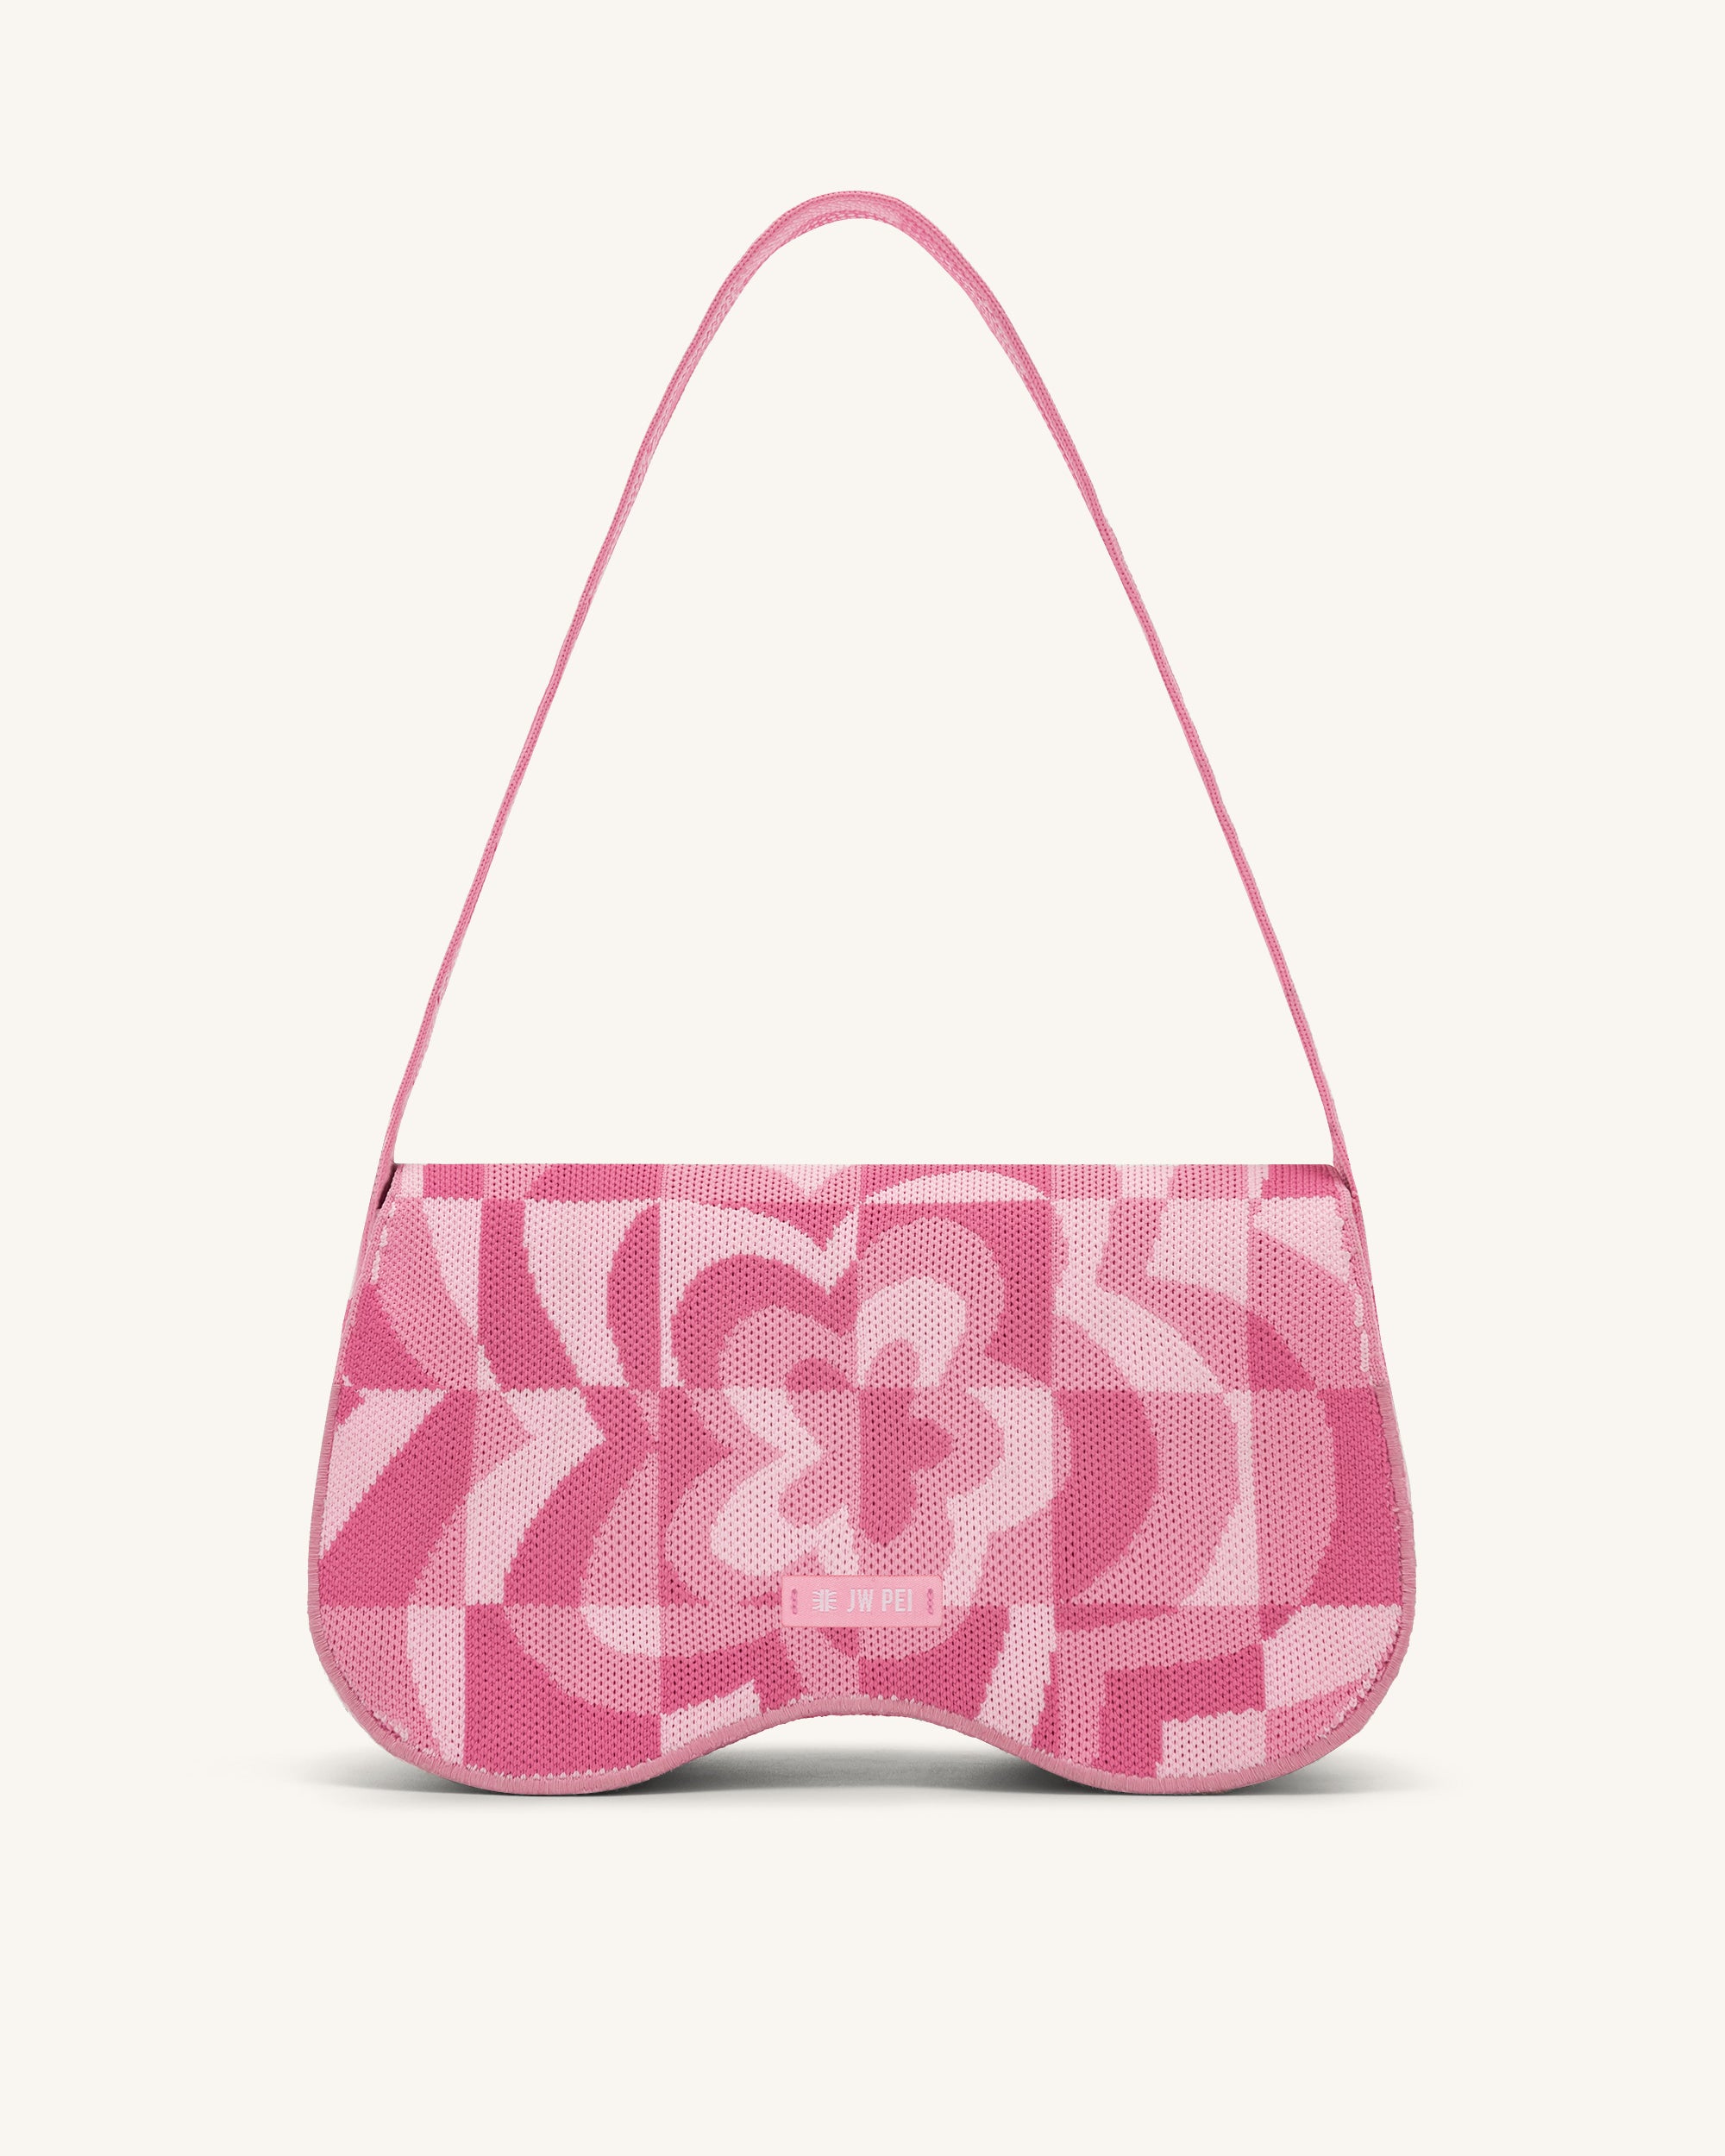 VBH Brera 32 Bag - Pink Satchels, Handbags - VBH20705